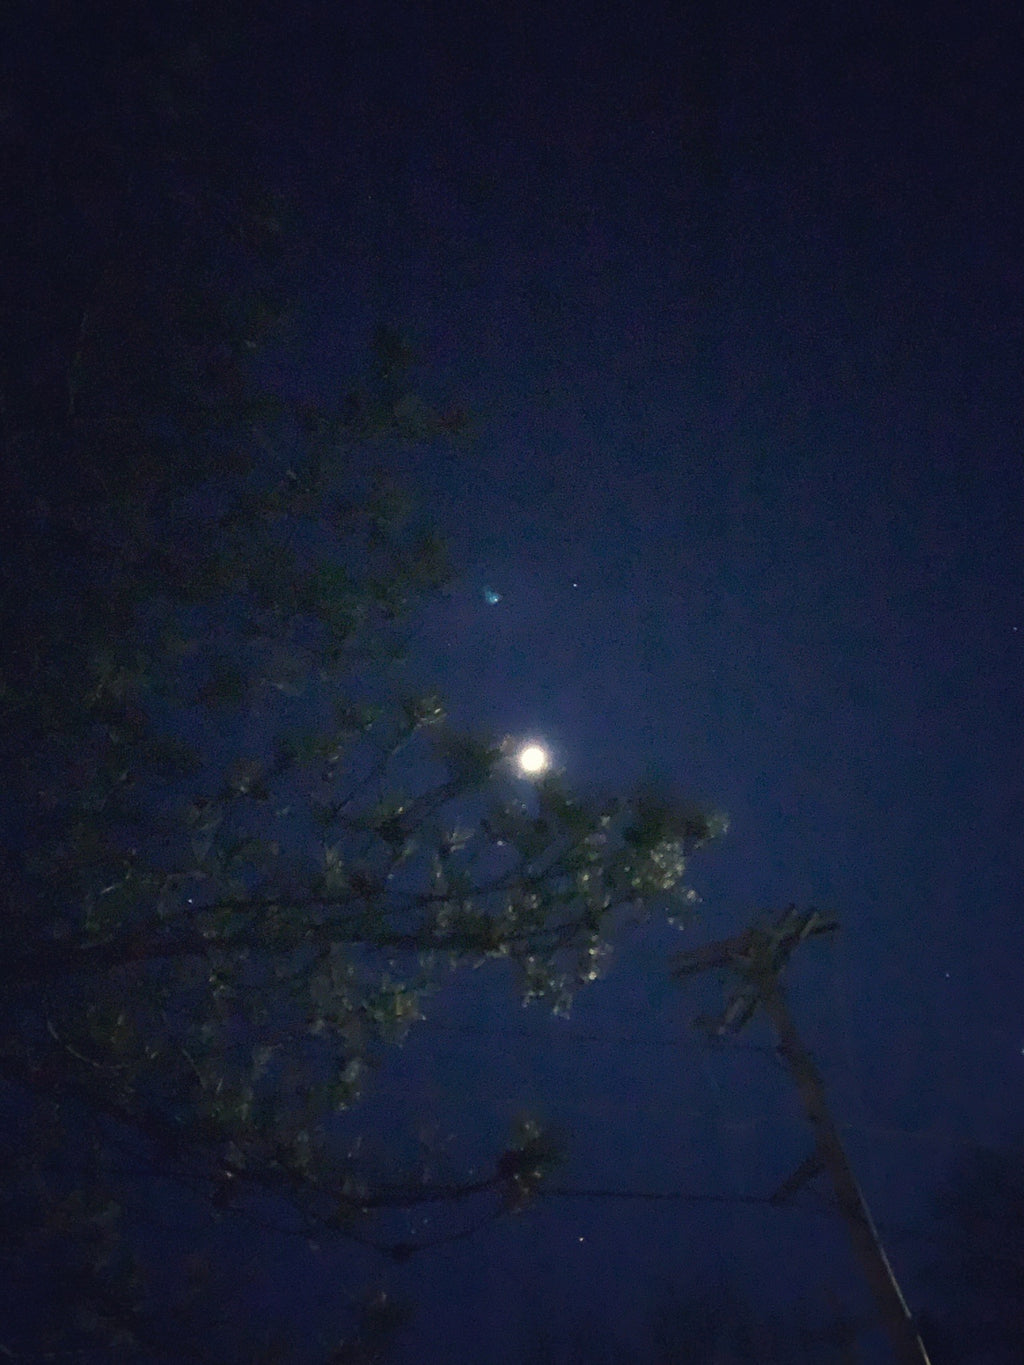 Moonlit night in Canandaigua